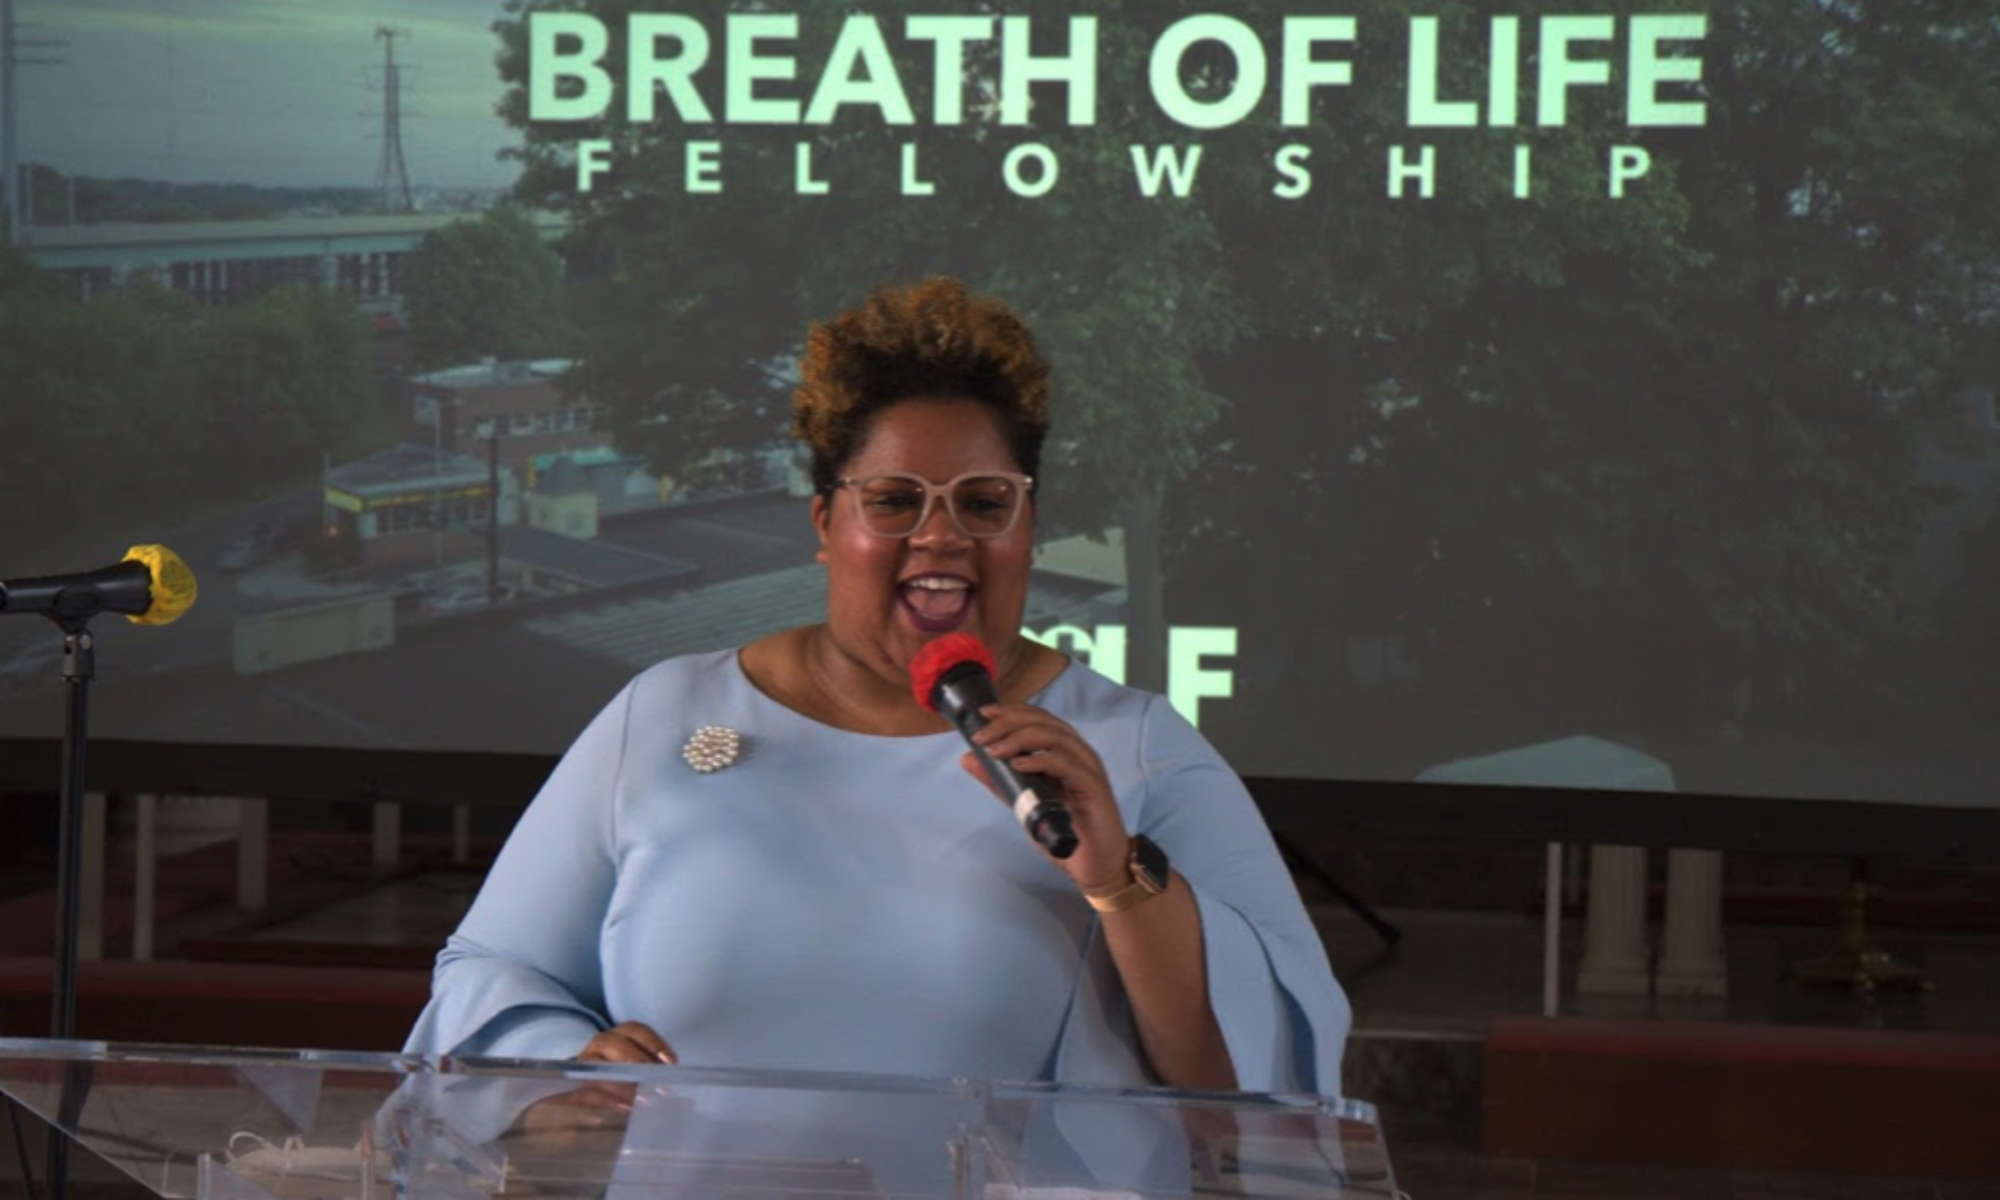 Breath of Life Fellowship